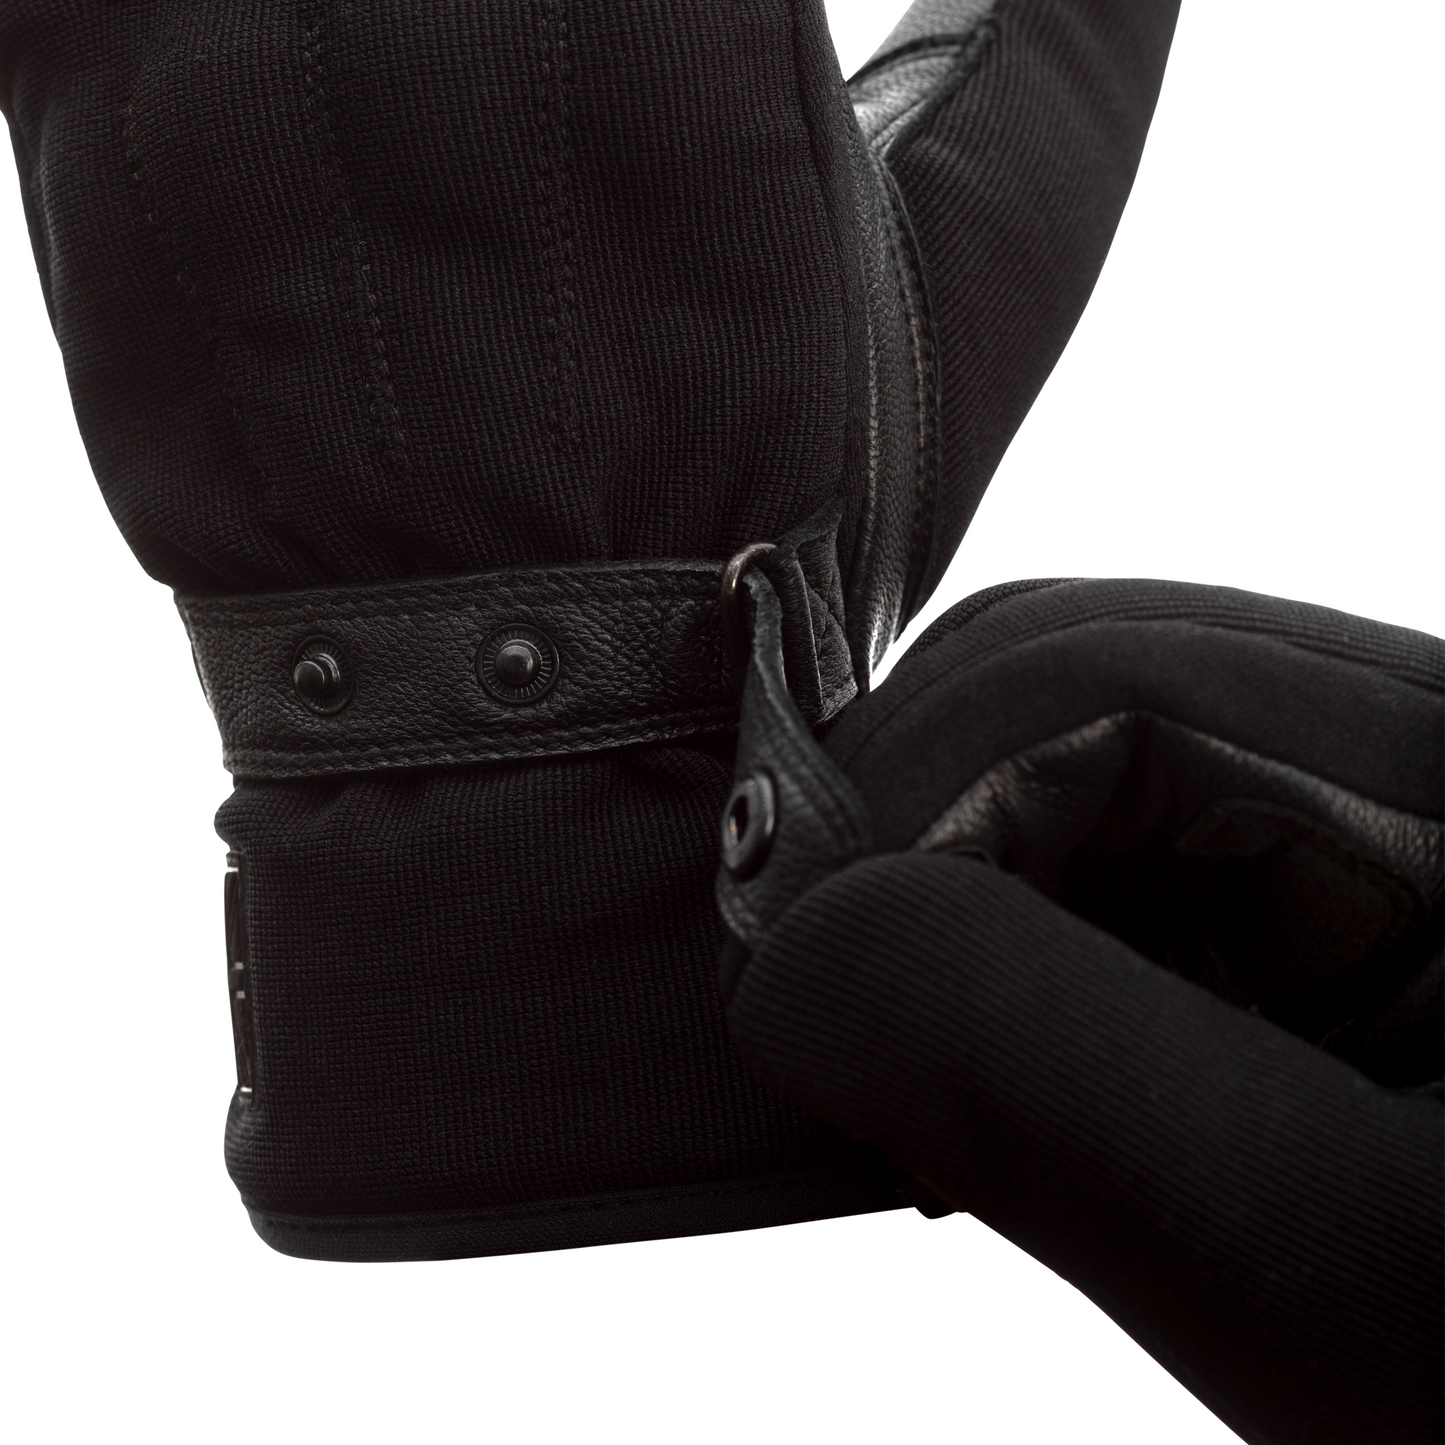 RST Shoreditch Gloves - CE APPROVED - Black